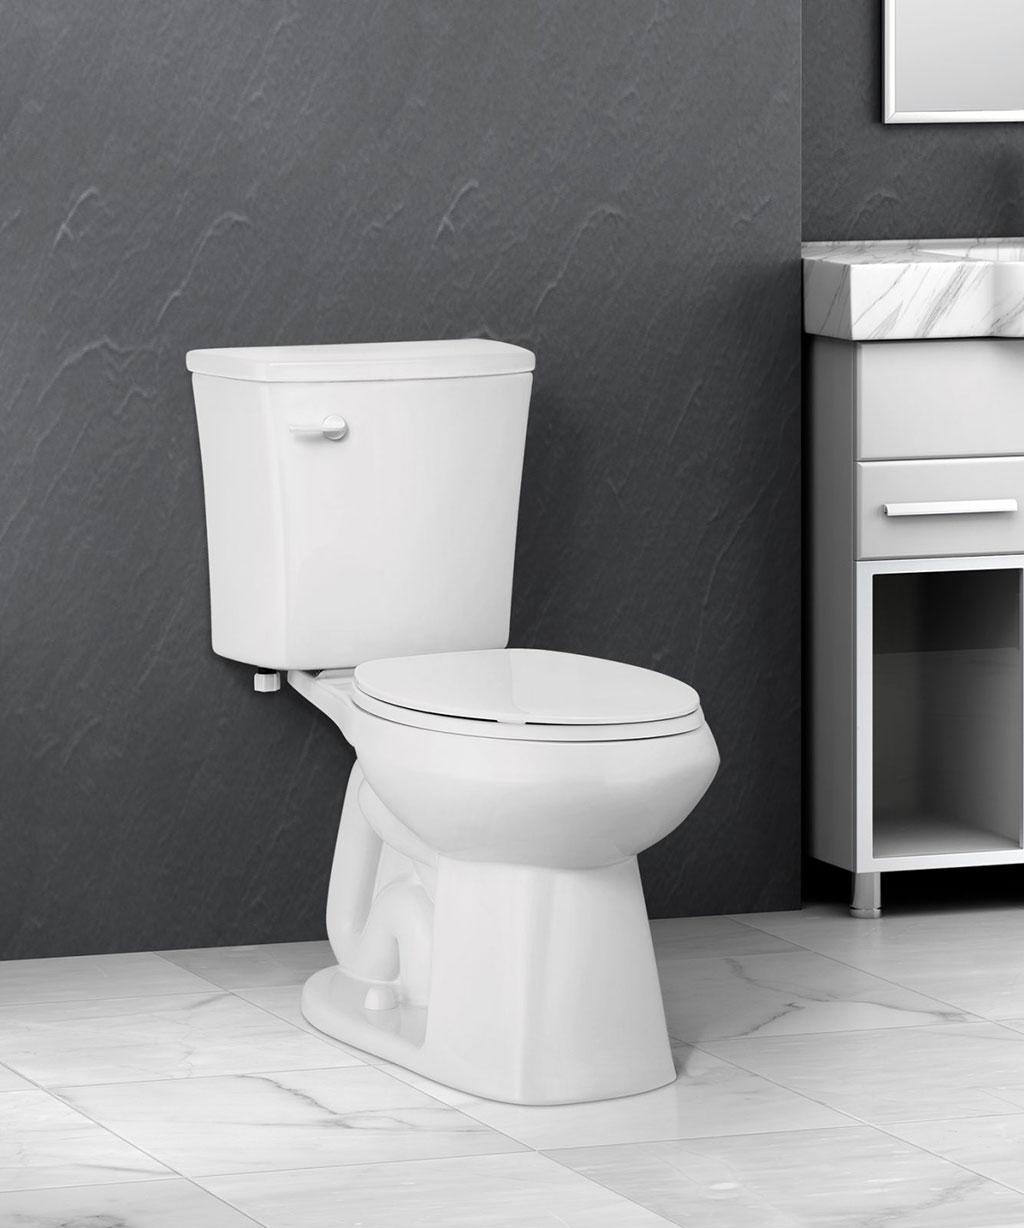 Toilet seat, Plumbing fixture, Interior design, White, Cabinetry, Black, Rectangle, Wood, Purple